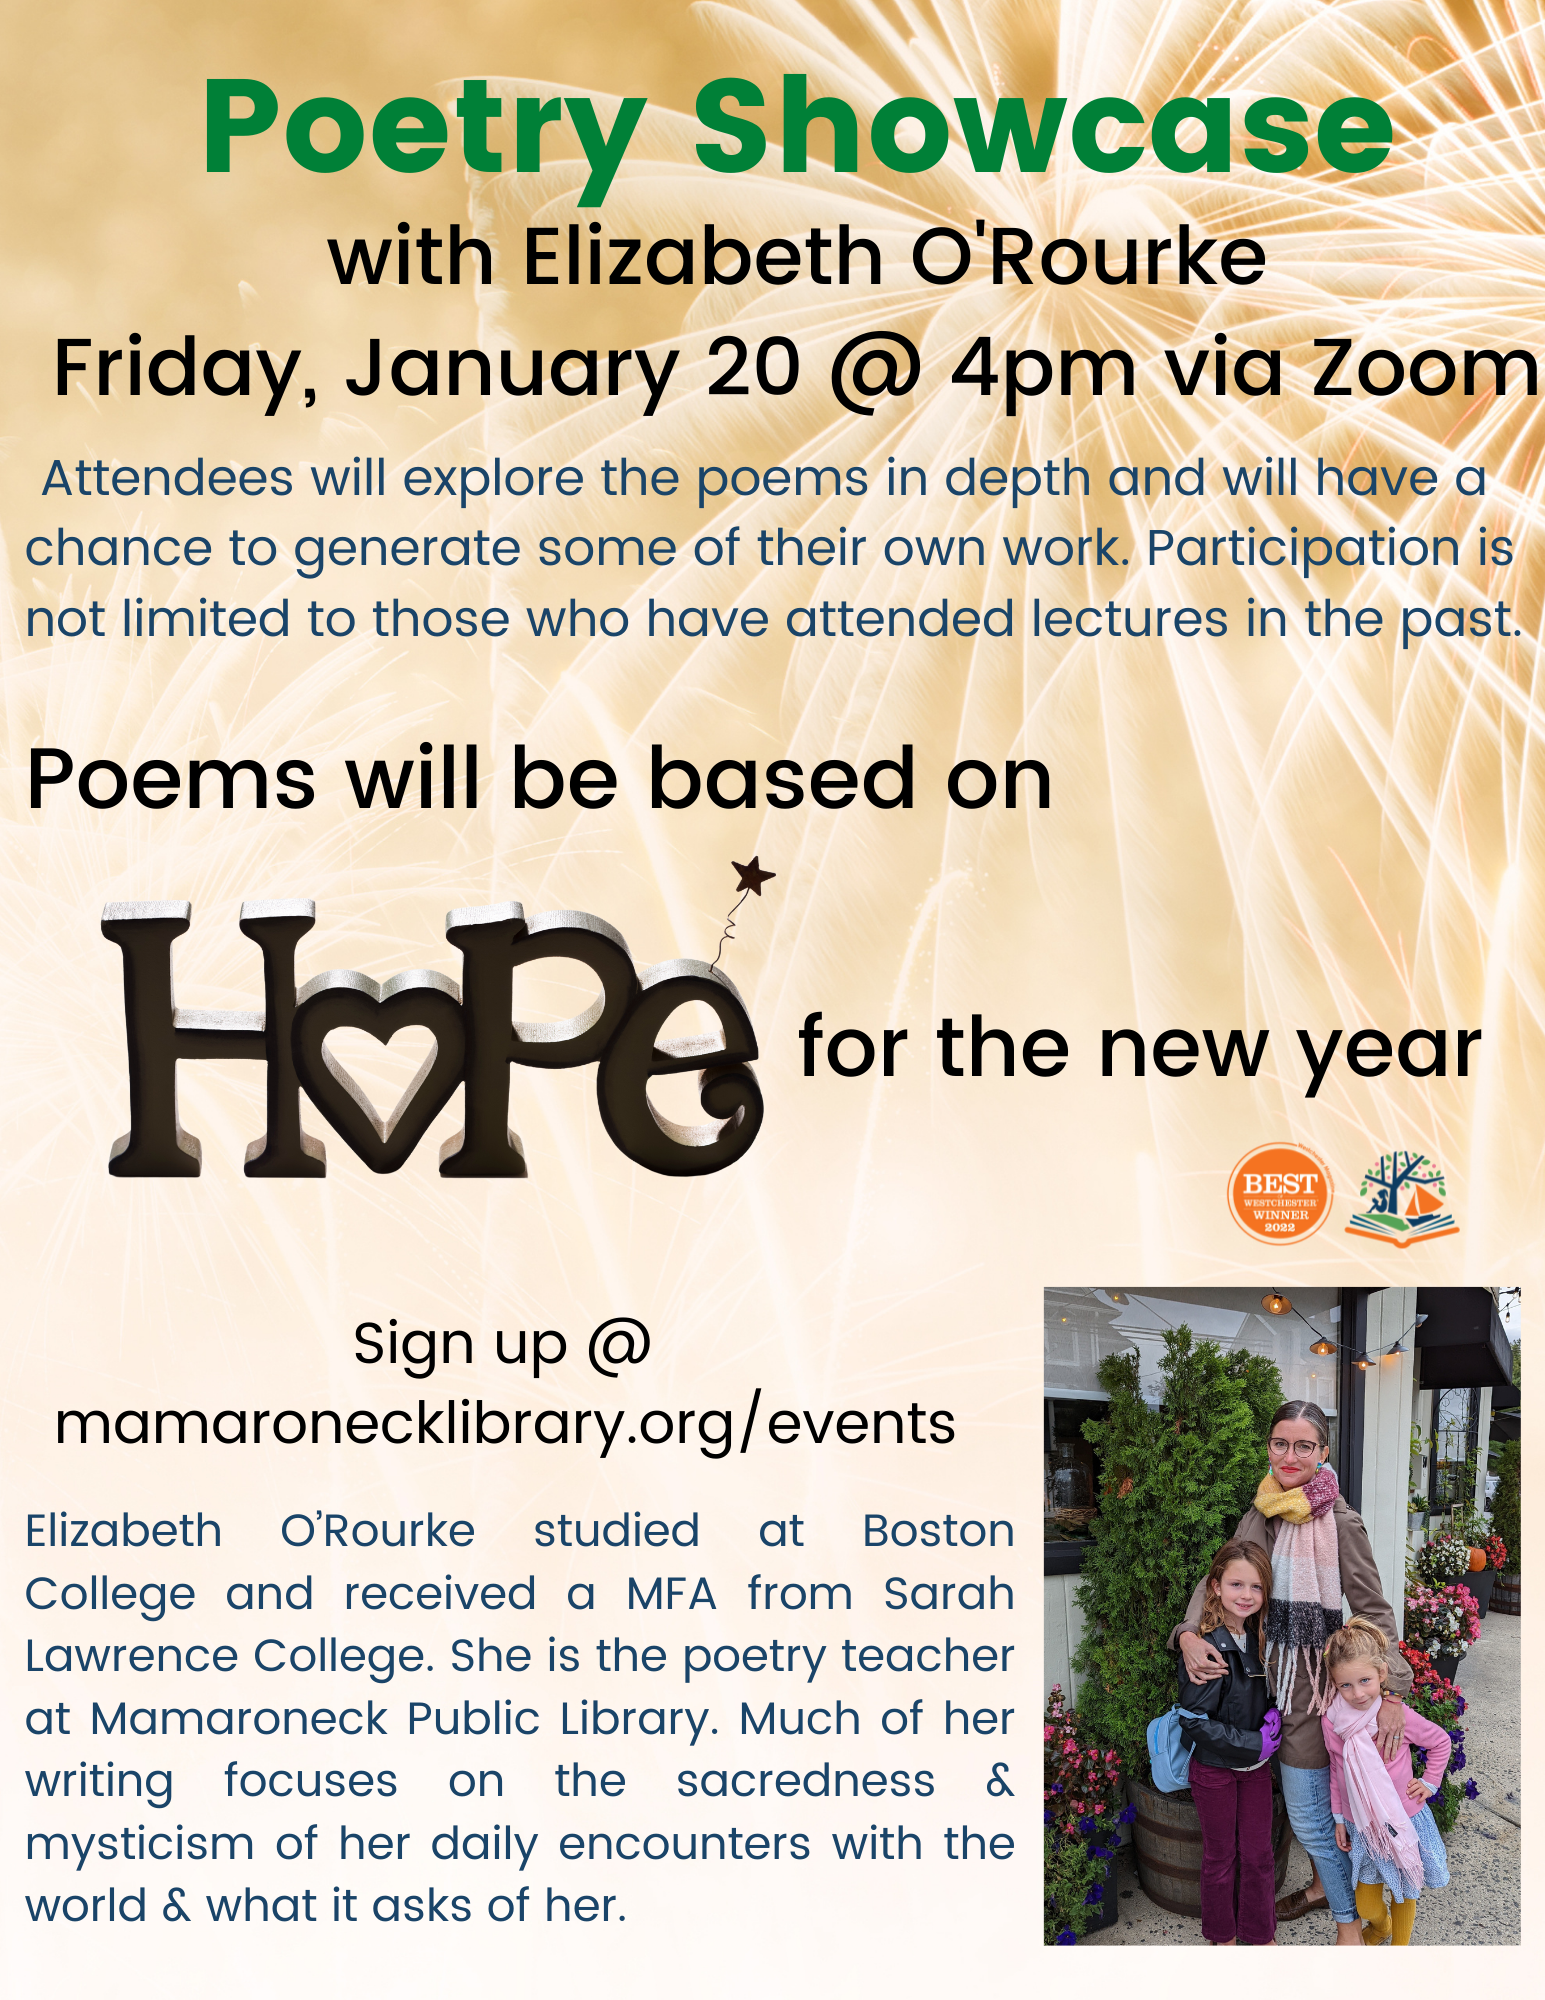 1/20 @ 4pm via zoom: Elizabeth O' Rourke poetry program